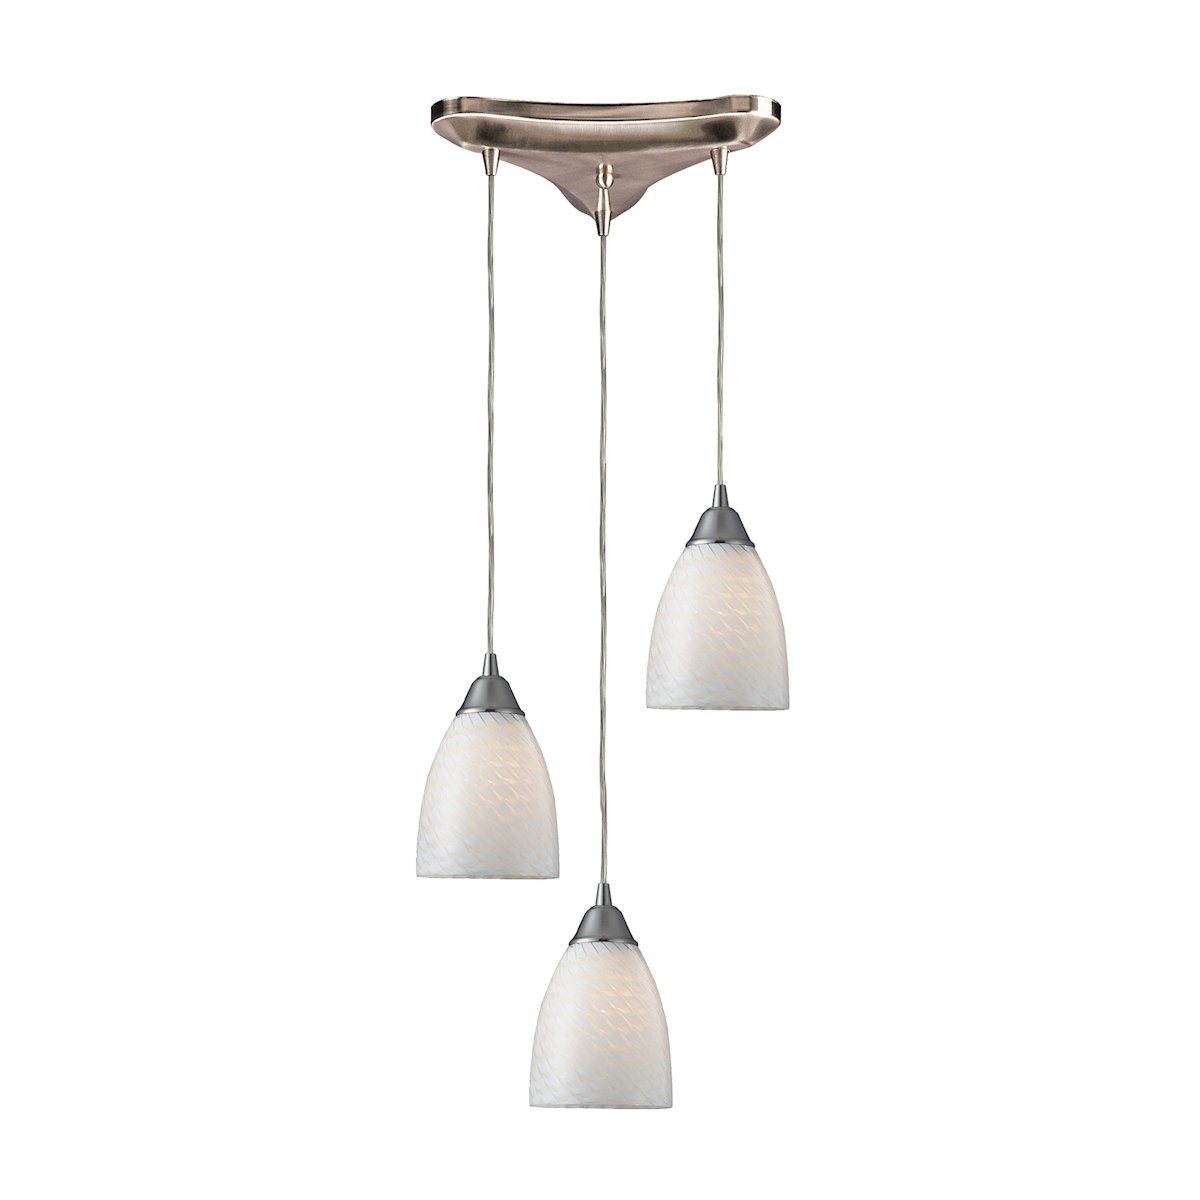 Arco Baleno 3 Light Pendant In Satin Nickel And White Swirl Glass Ceiling Elk Lighting 